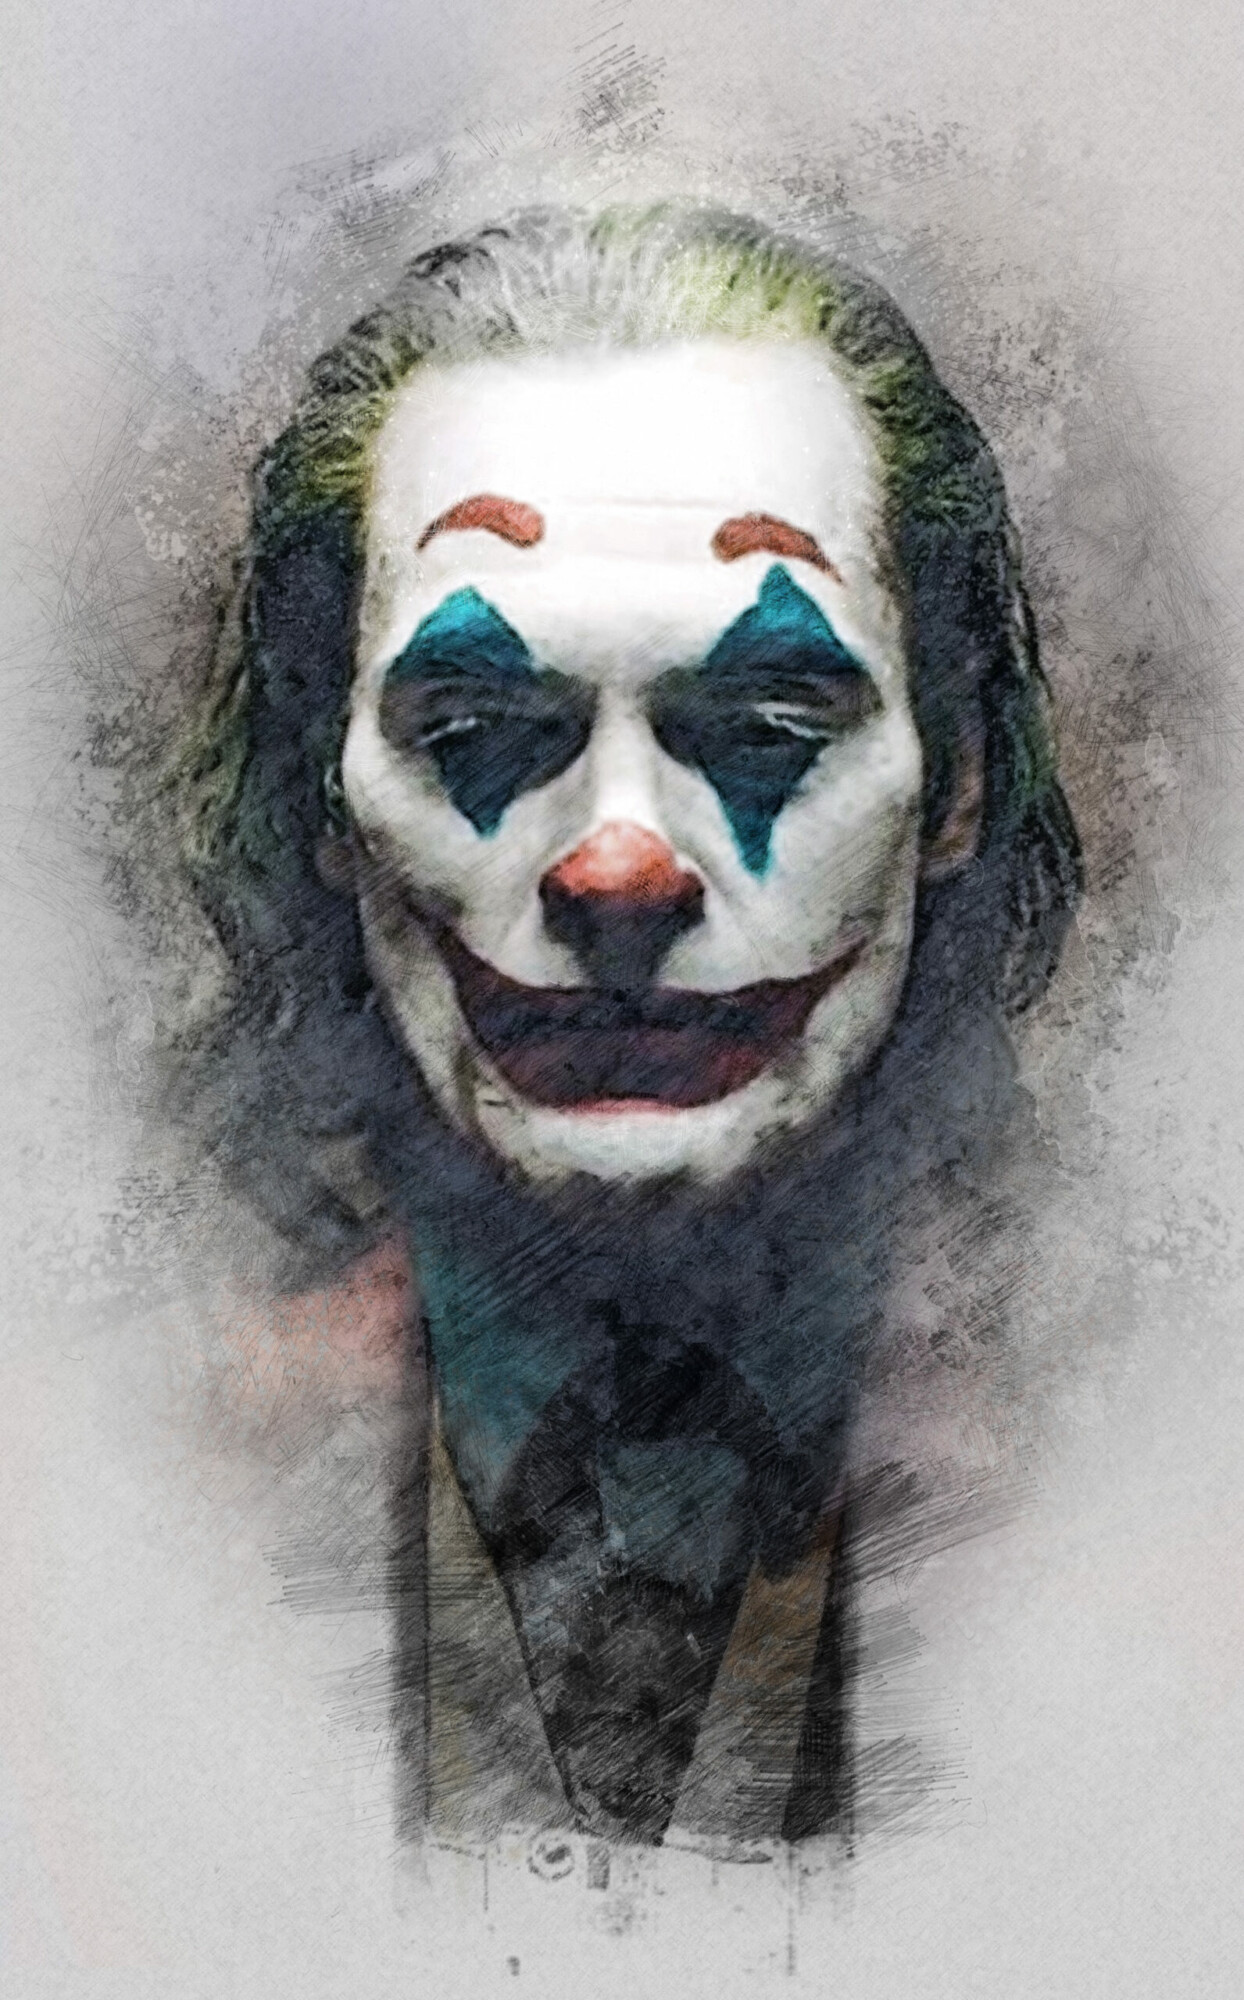 Joker: Put On A Happy Face - PosterSpy